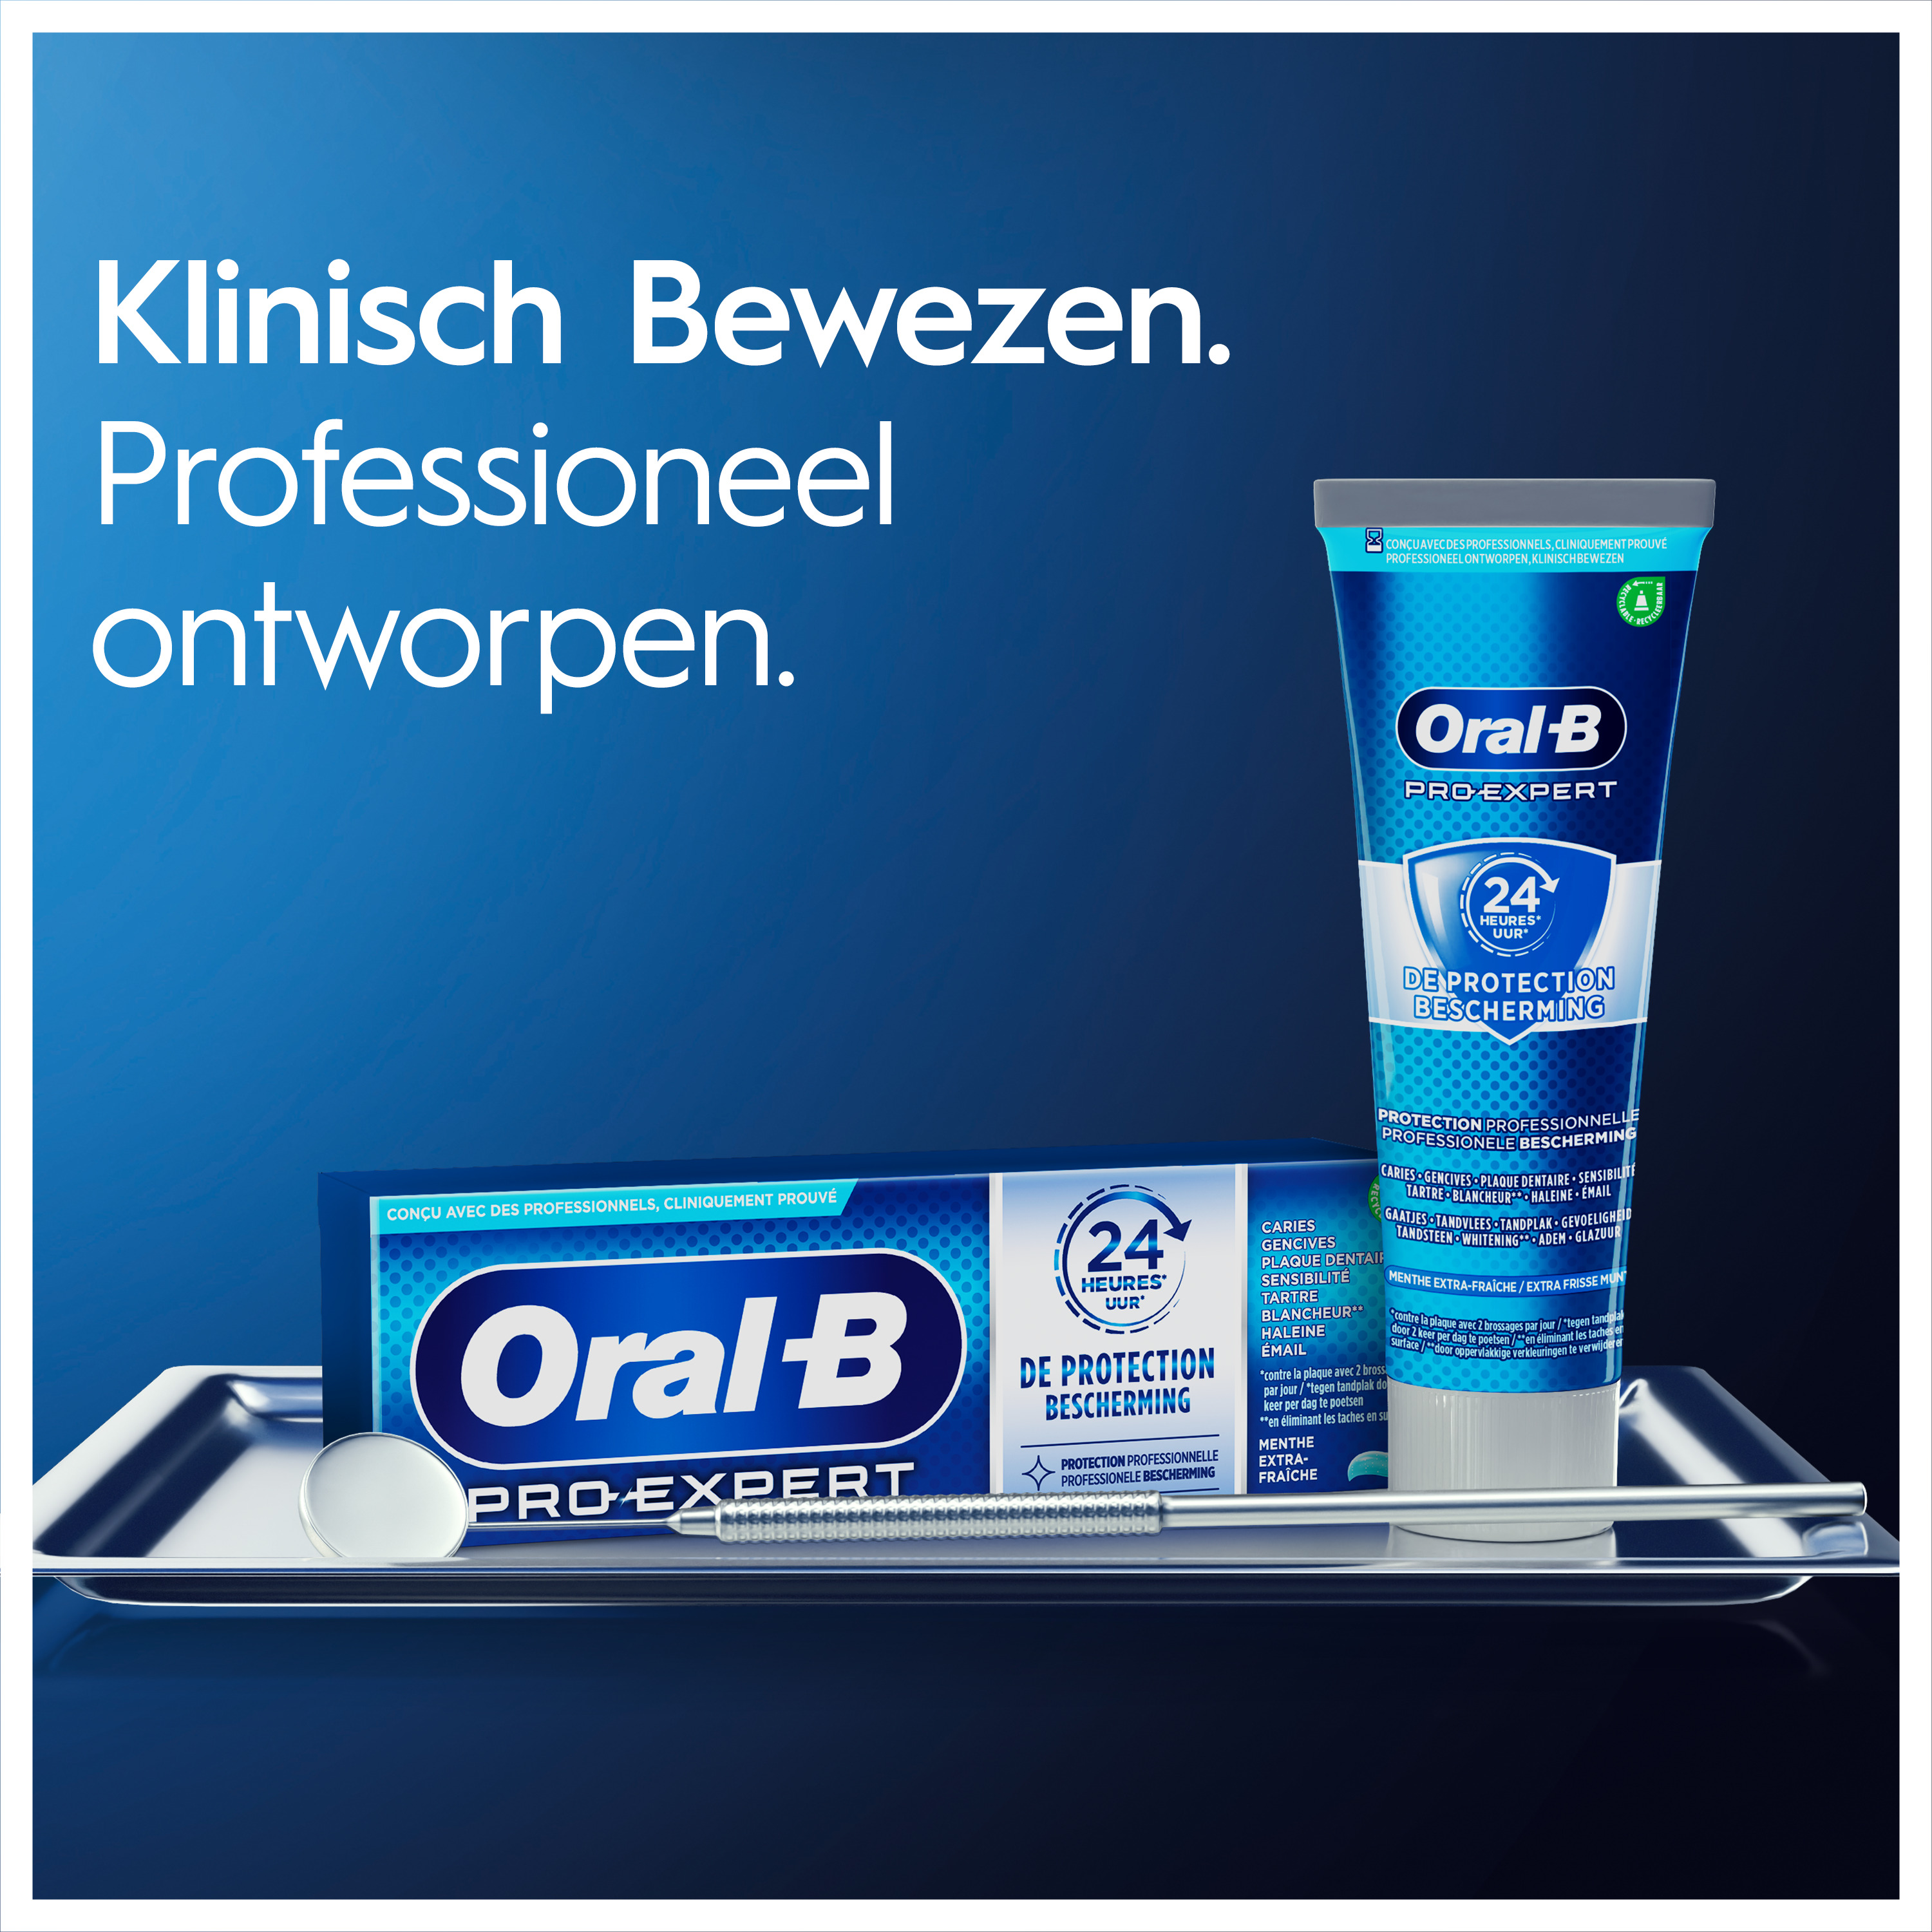 premie Tranen Lol Wat is de beste tandpasta voor jou? | Oral-B NL